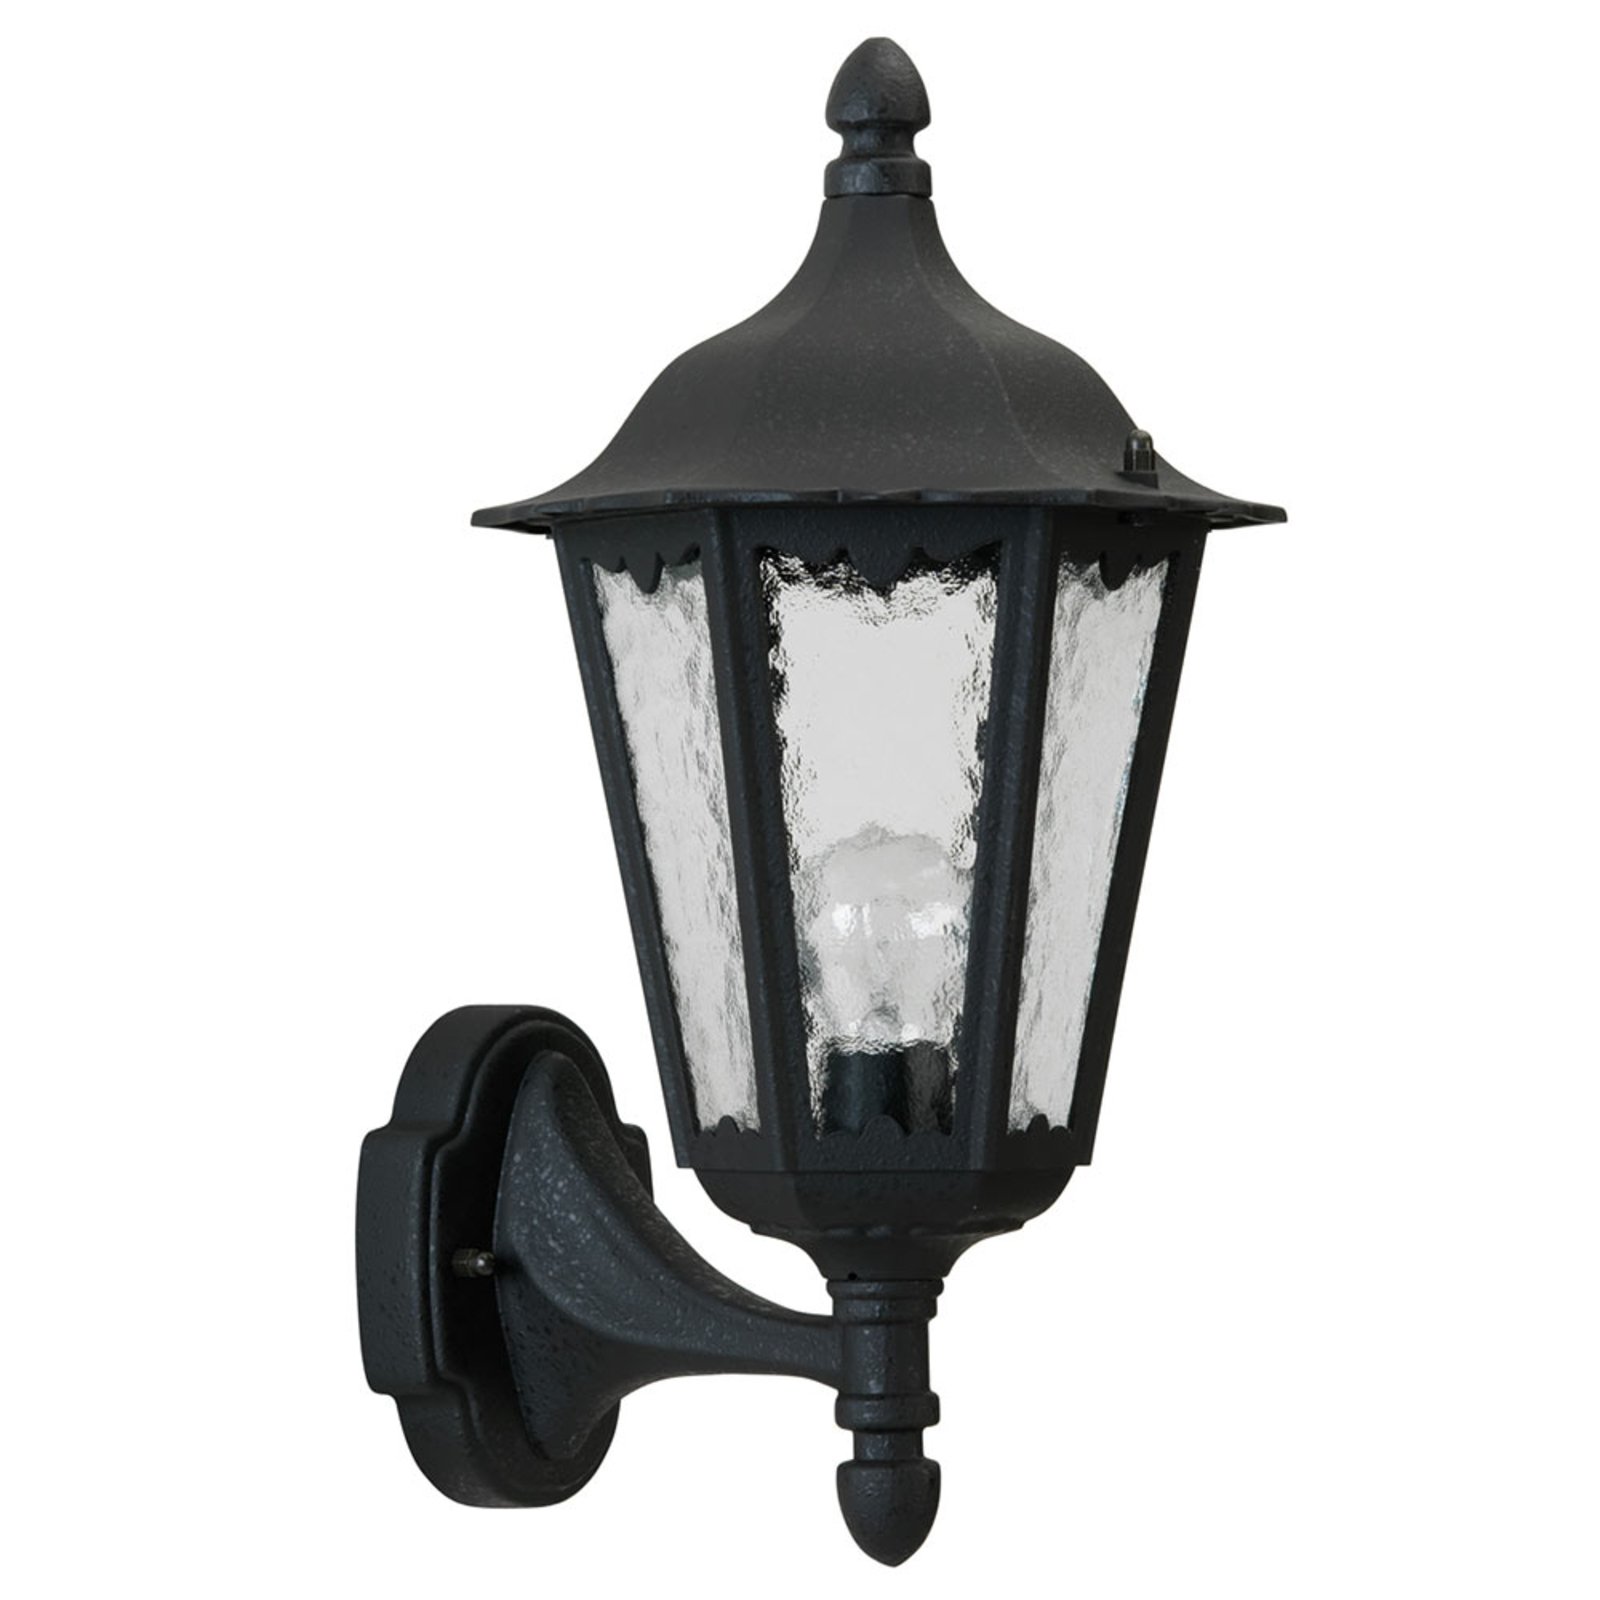 1818 outdoor wall light, standing, black